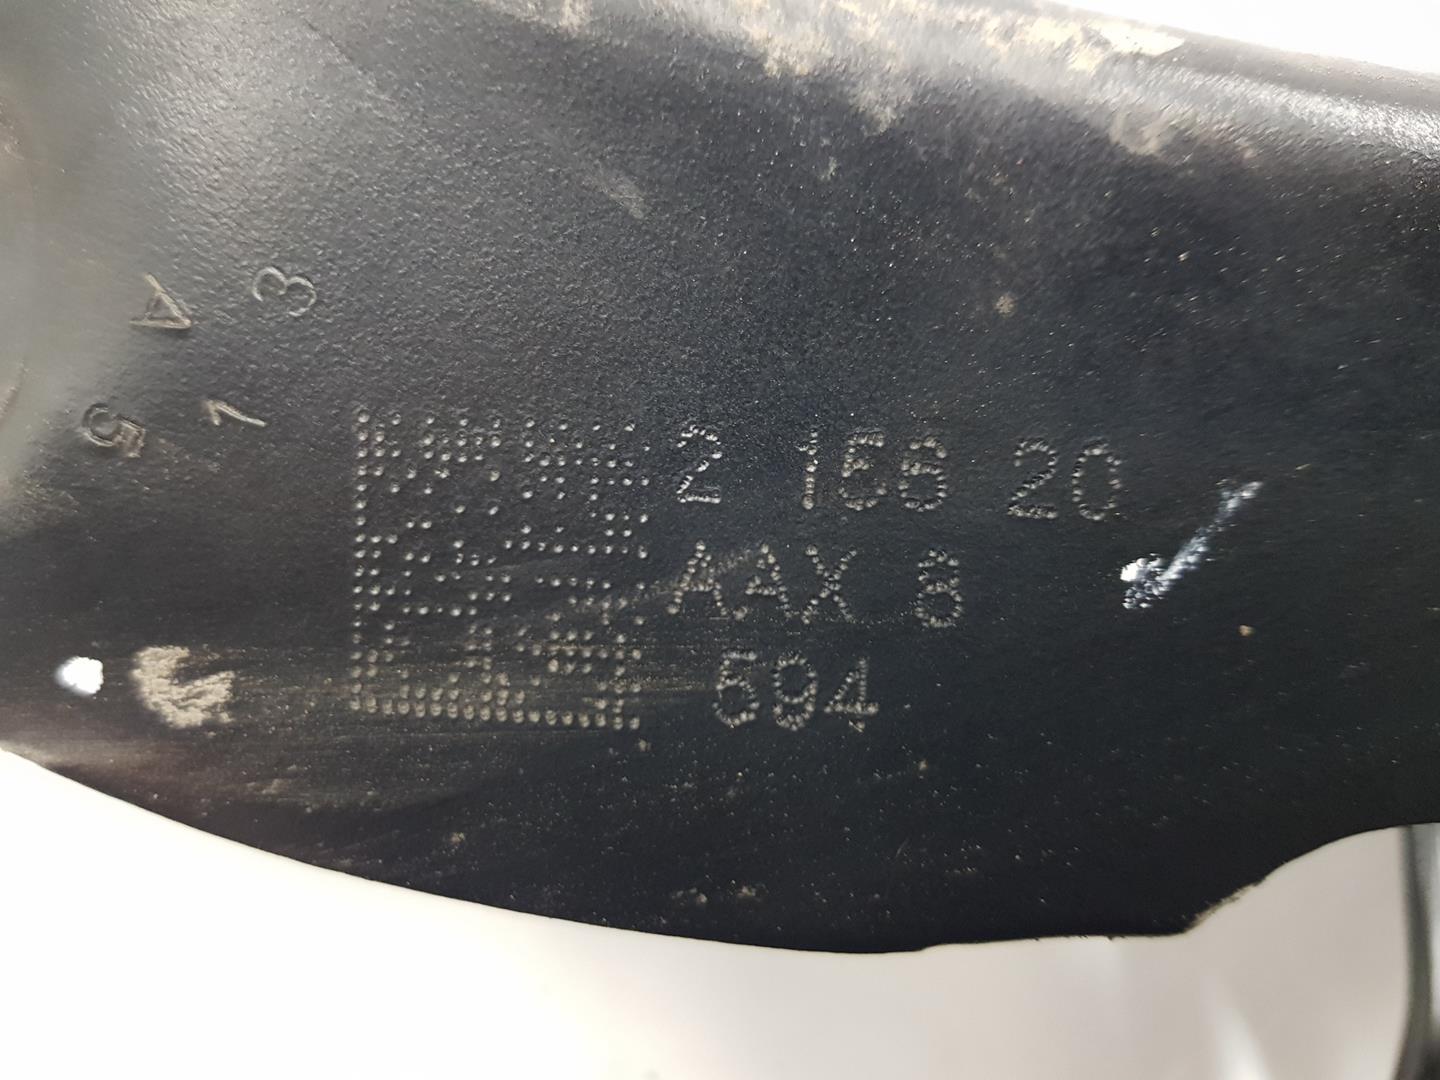 MINI Cooper R56 (2006-2015) Rear Left Wheel Hub 33326851575, 33326851575 19831008